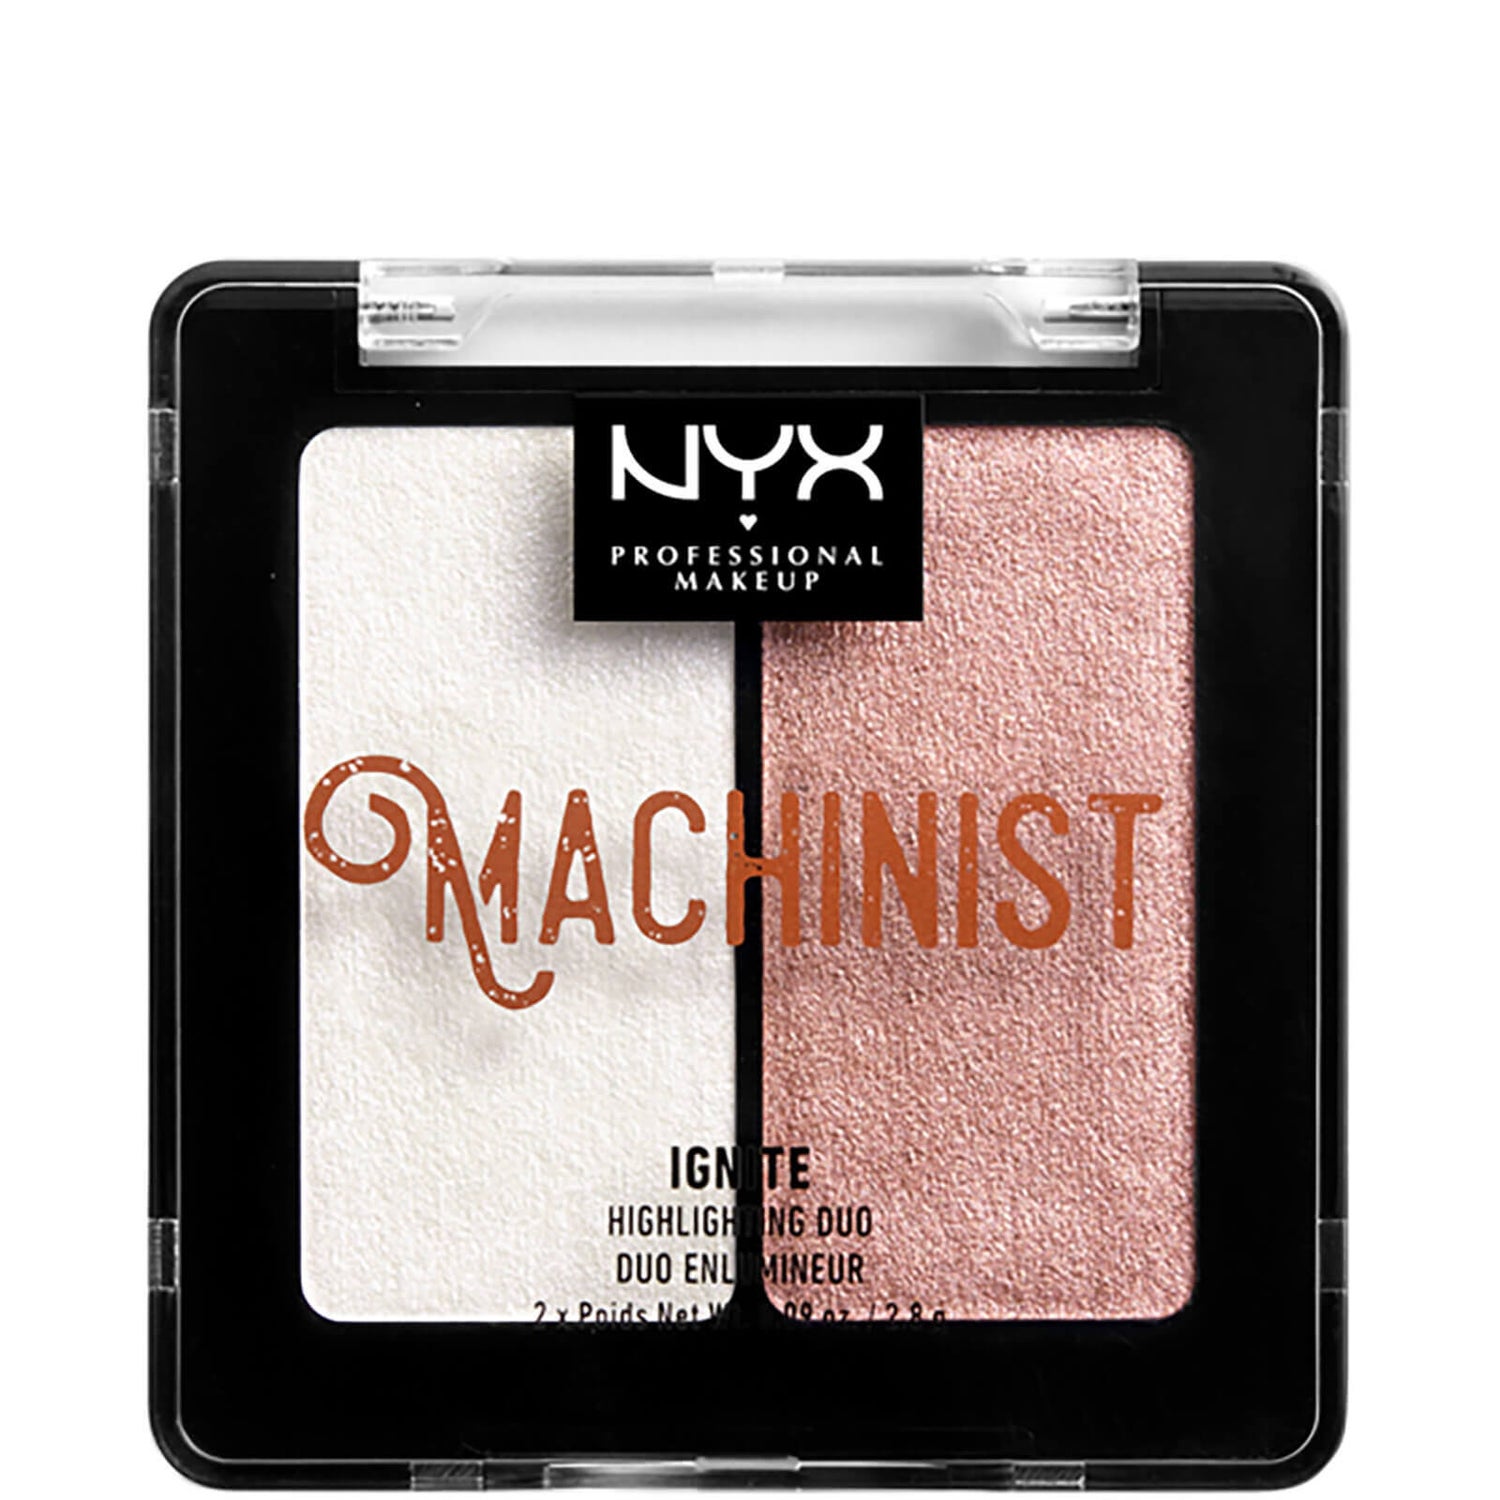 Duo d'Enlumineurs Machinist NYX Professional Makeup – Ignite